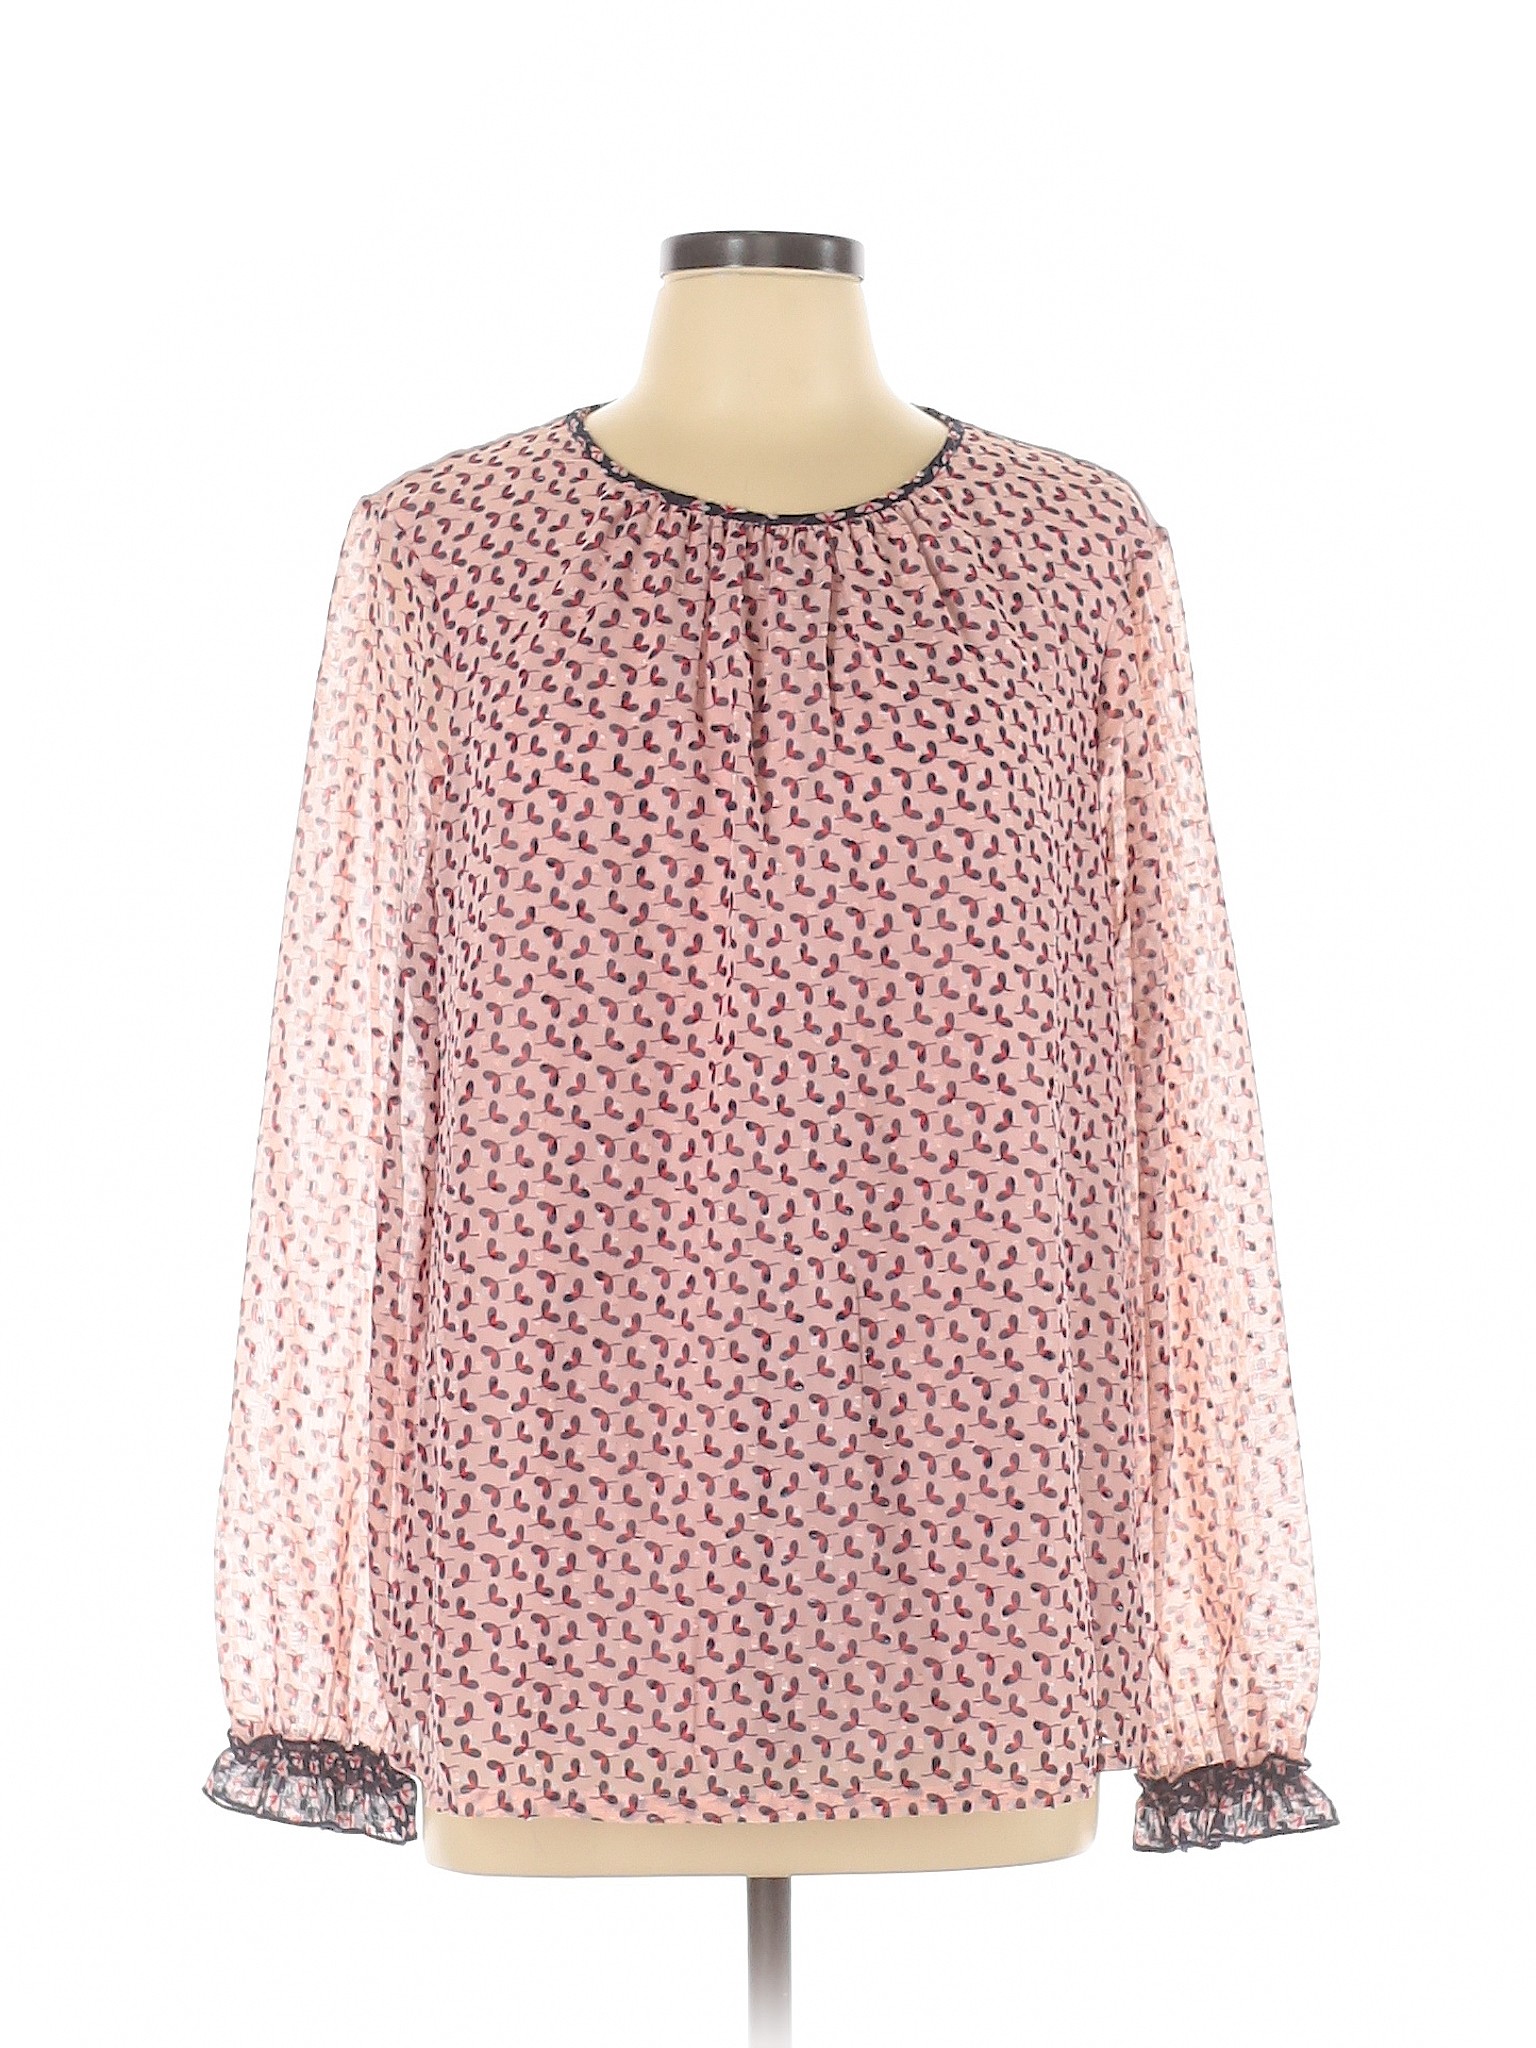 Boden Pink Long Sleeve Blouse Size 14 - 71% off | thredUP